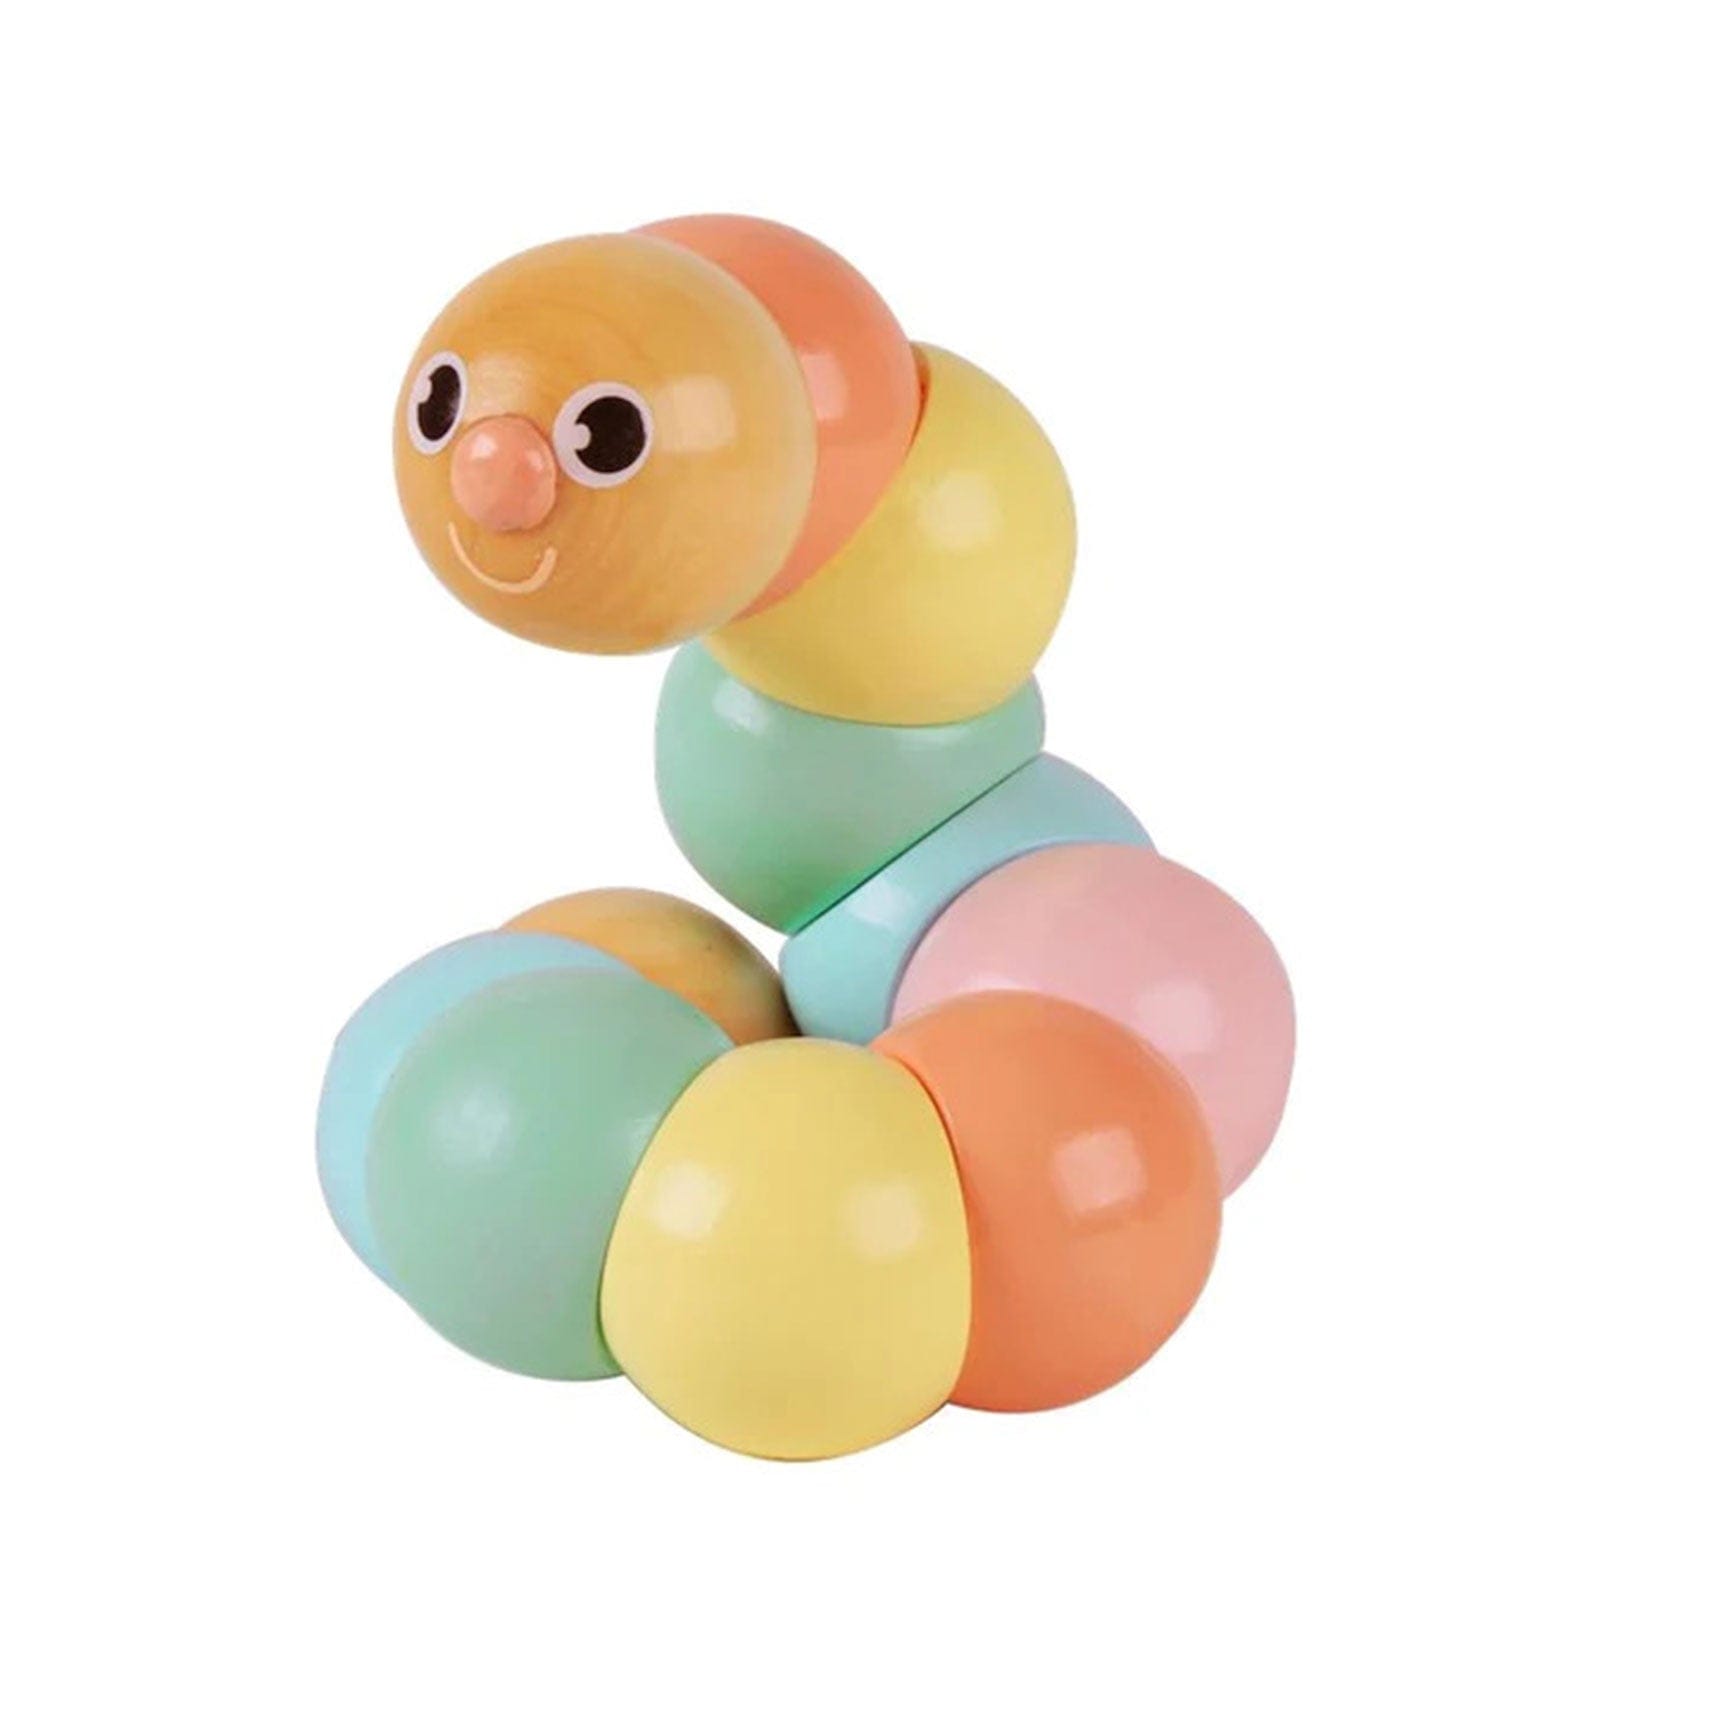 Classic World sensory baby toys Classic World Caterpillar - Pastel Colours CW54235